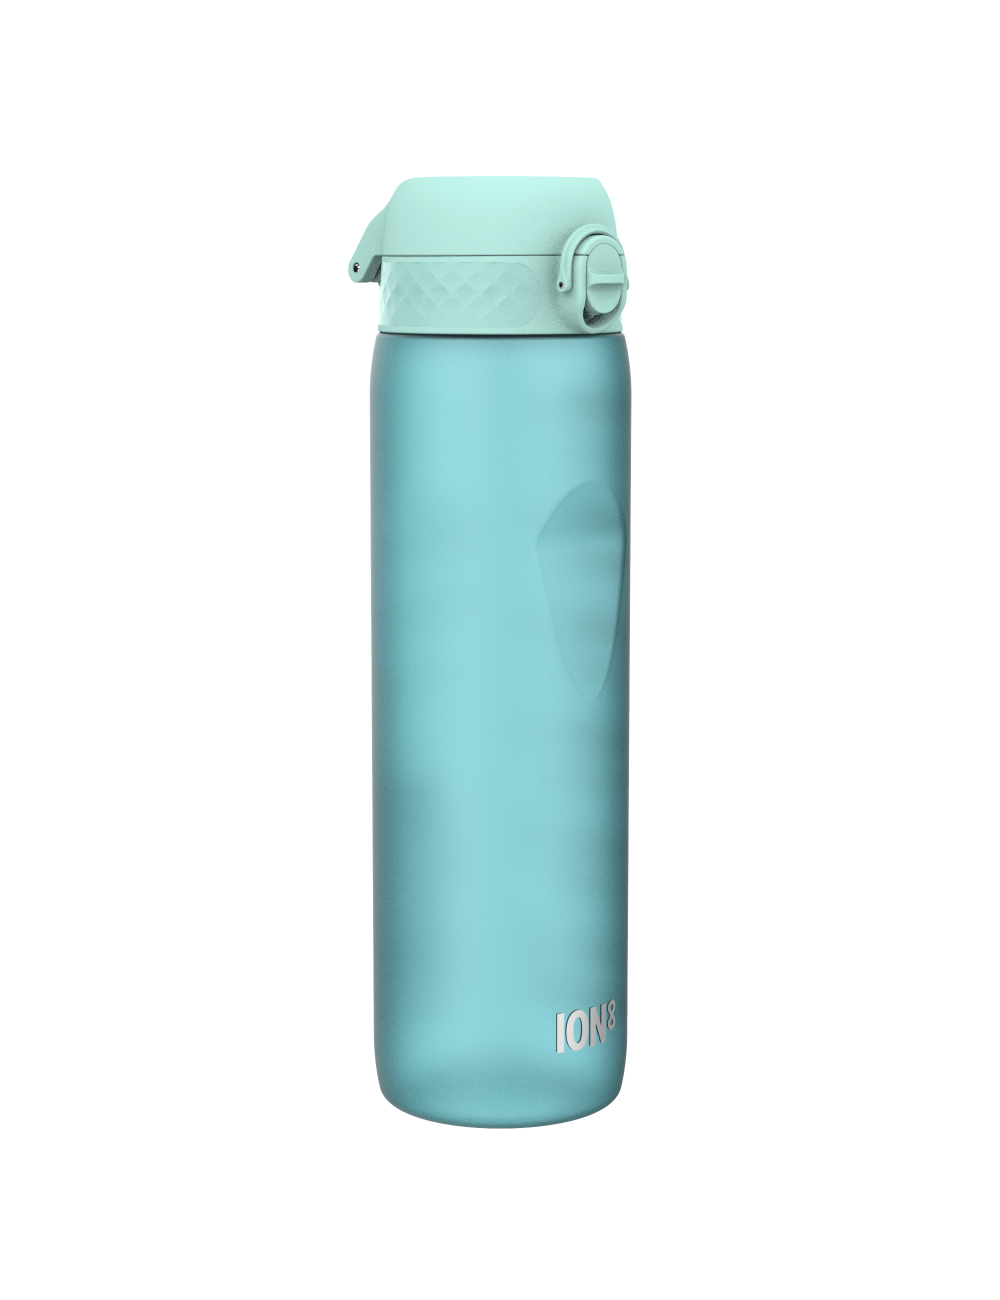 Butelka ION8 BPA Sonic Blue Motivator 1000 ml